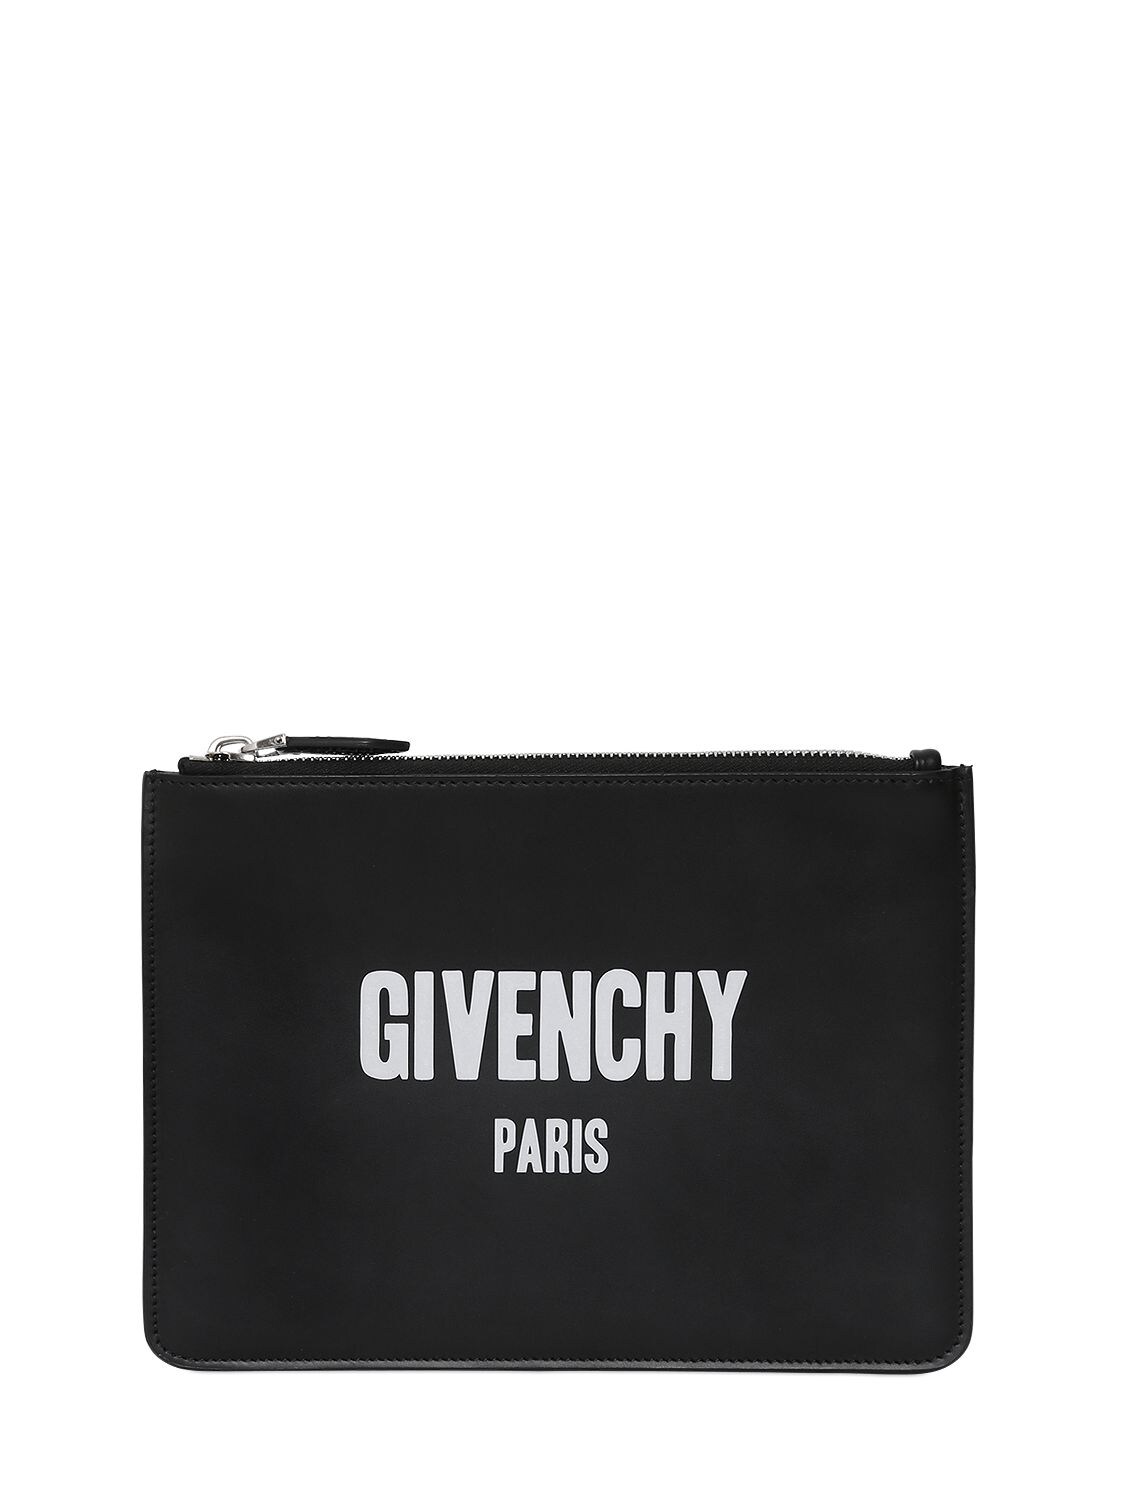 Givenchy Paris. Мужской клатч Givenchy. Папка мужская Givenchy чёрная. Givenchy Paris рюкзак. Media leather